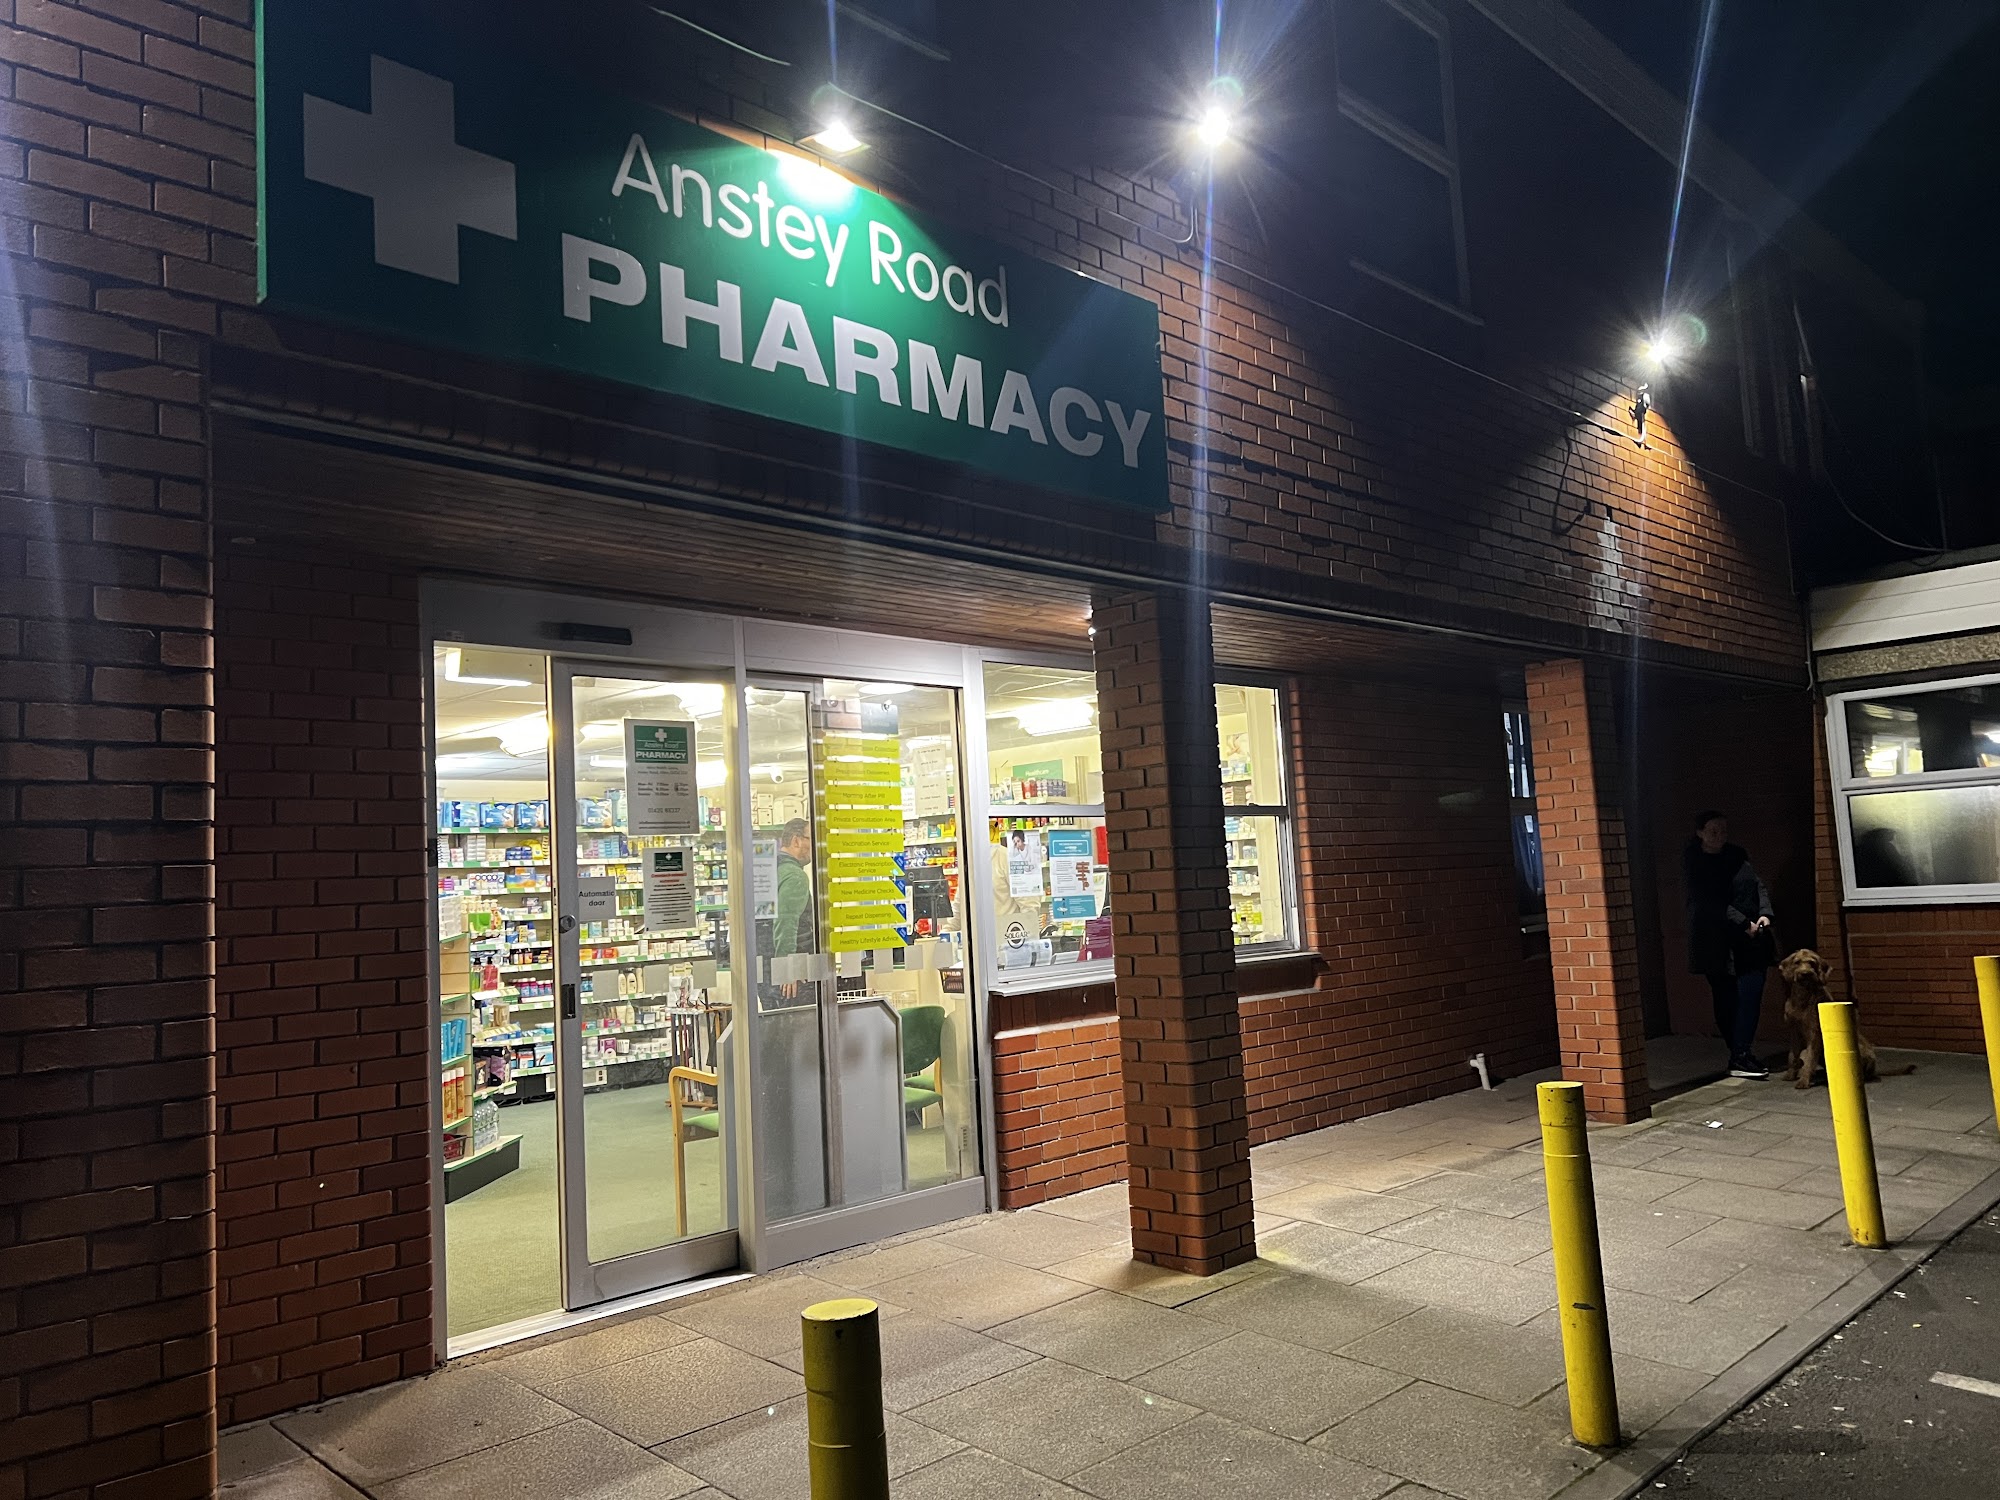 Anstey Road Pharmacy